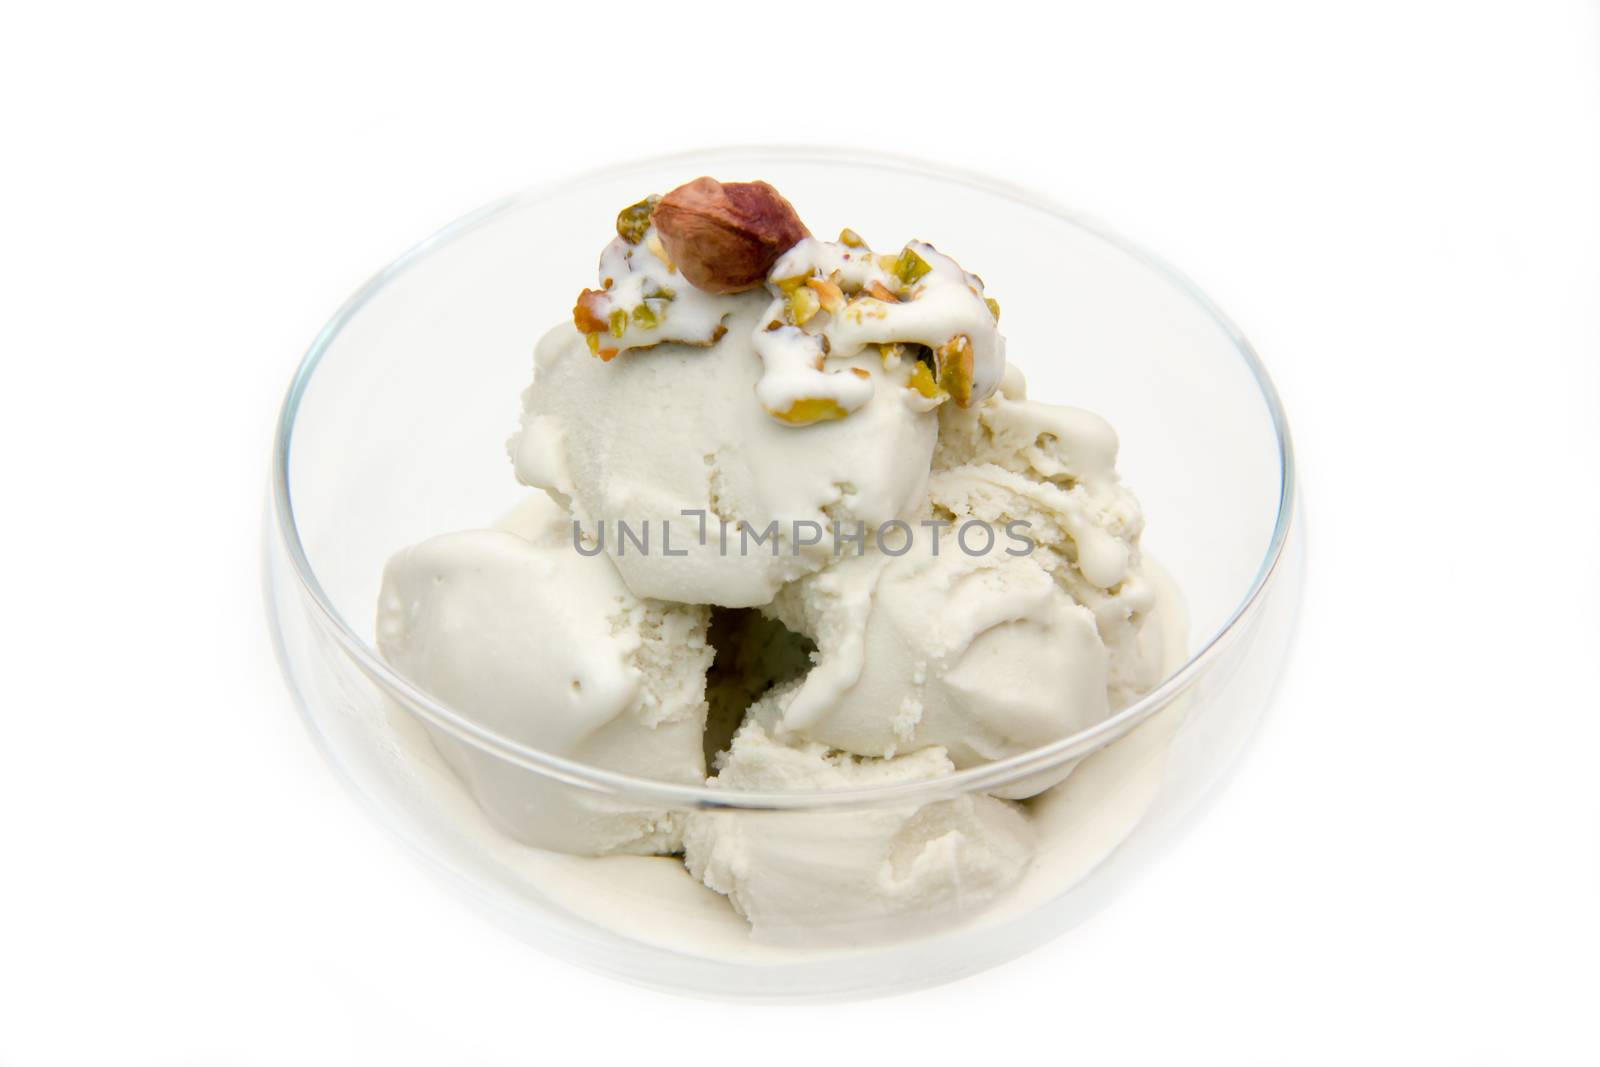 Pistachio ice cream in bowl on white background